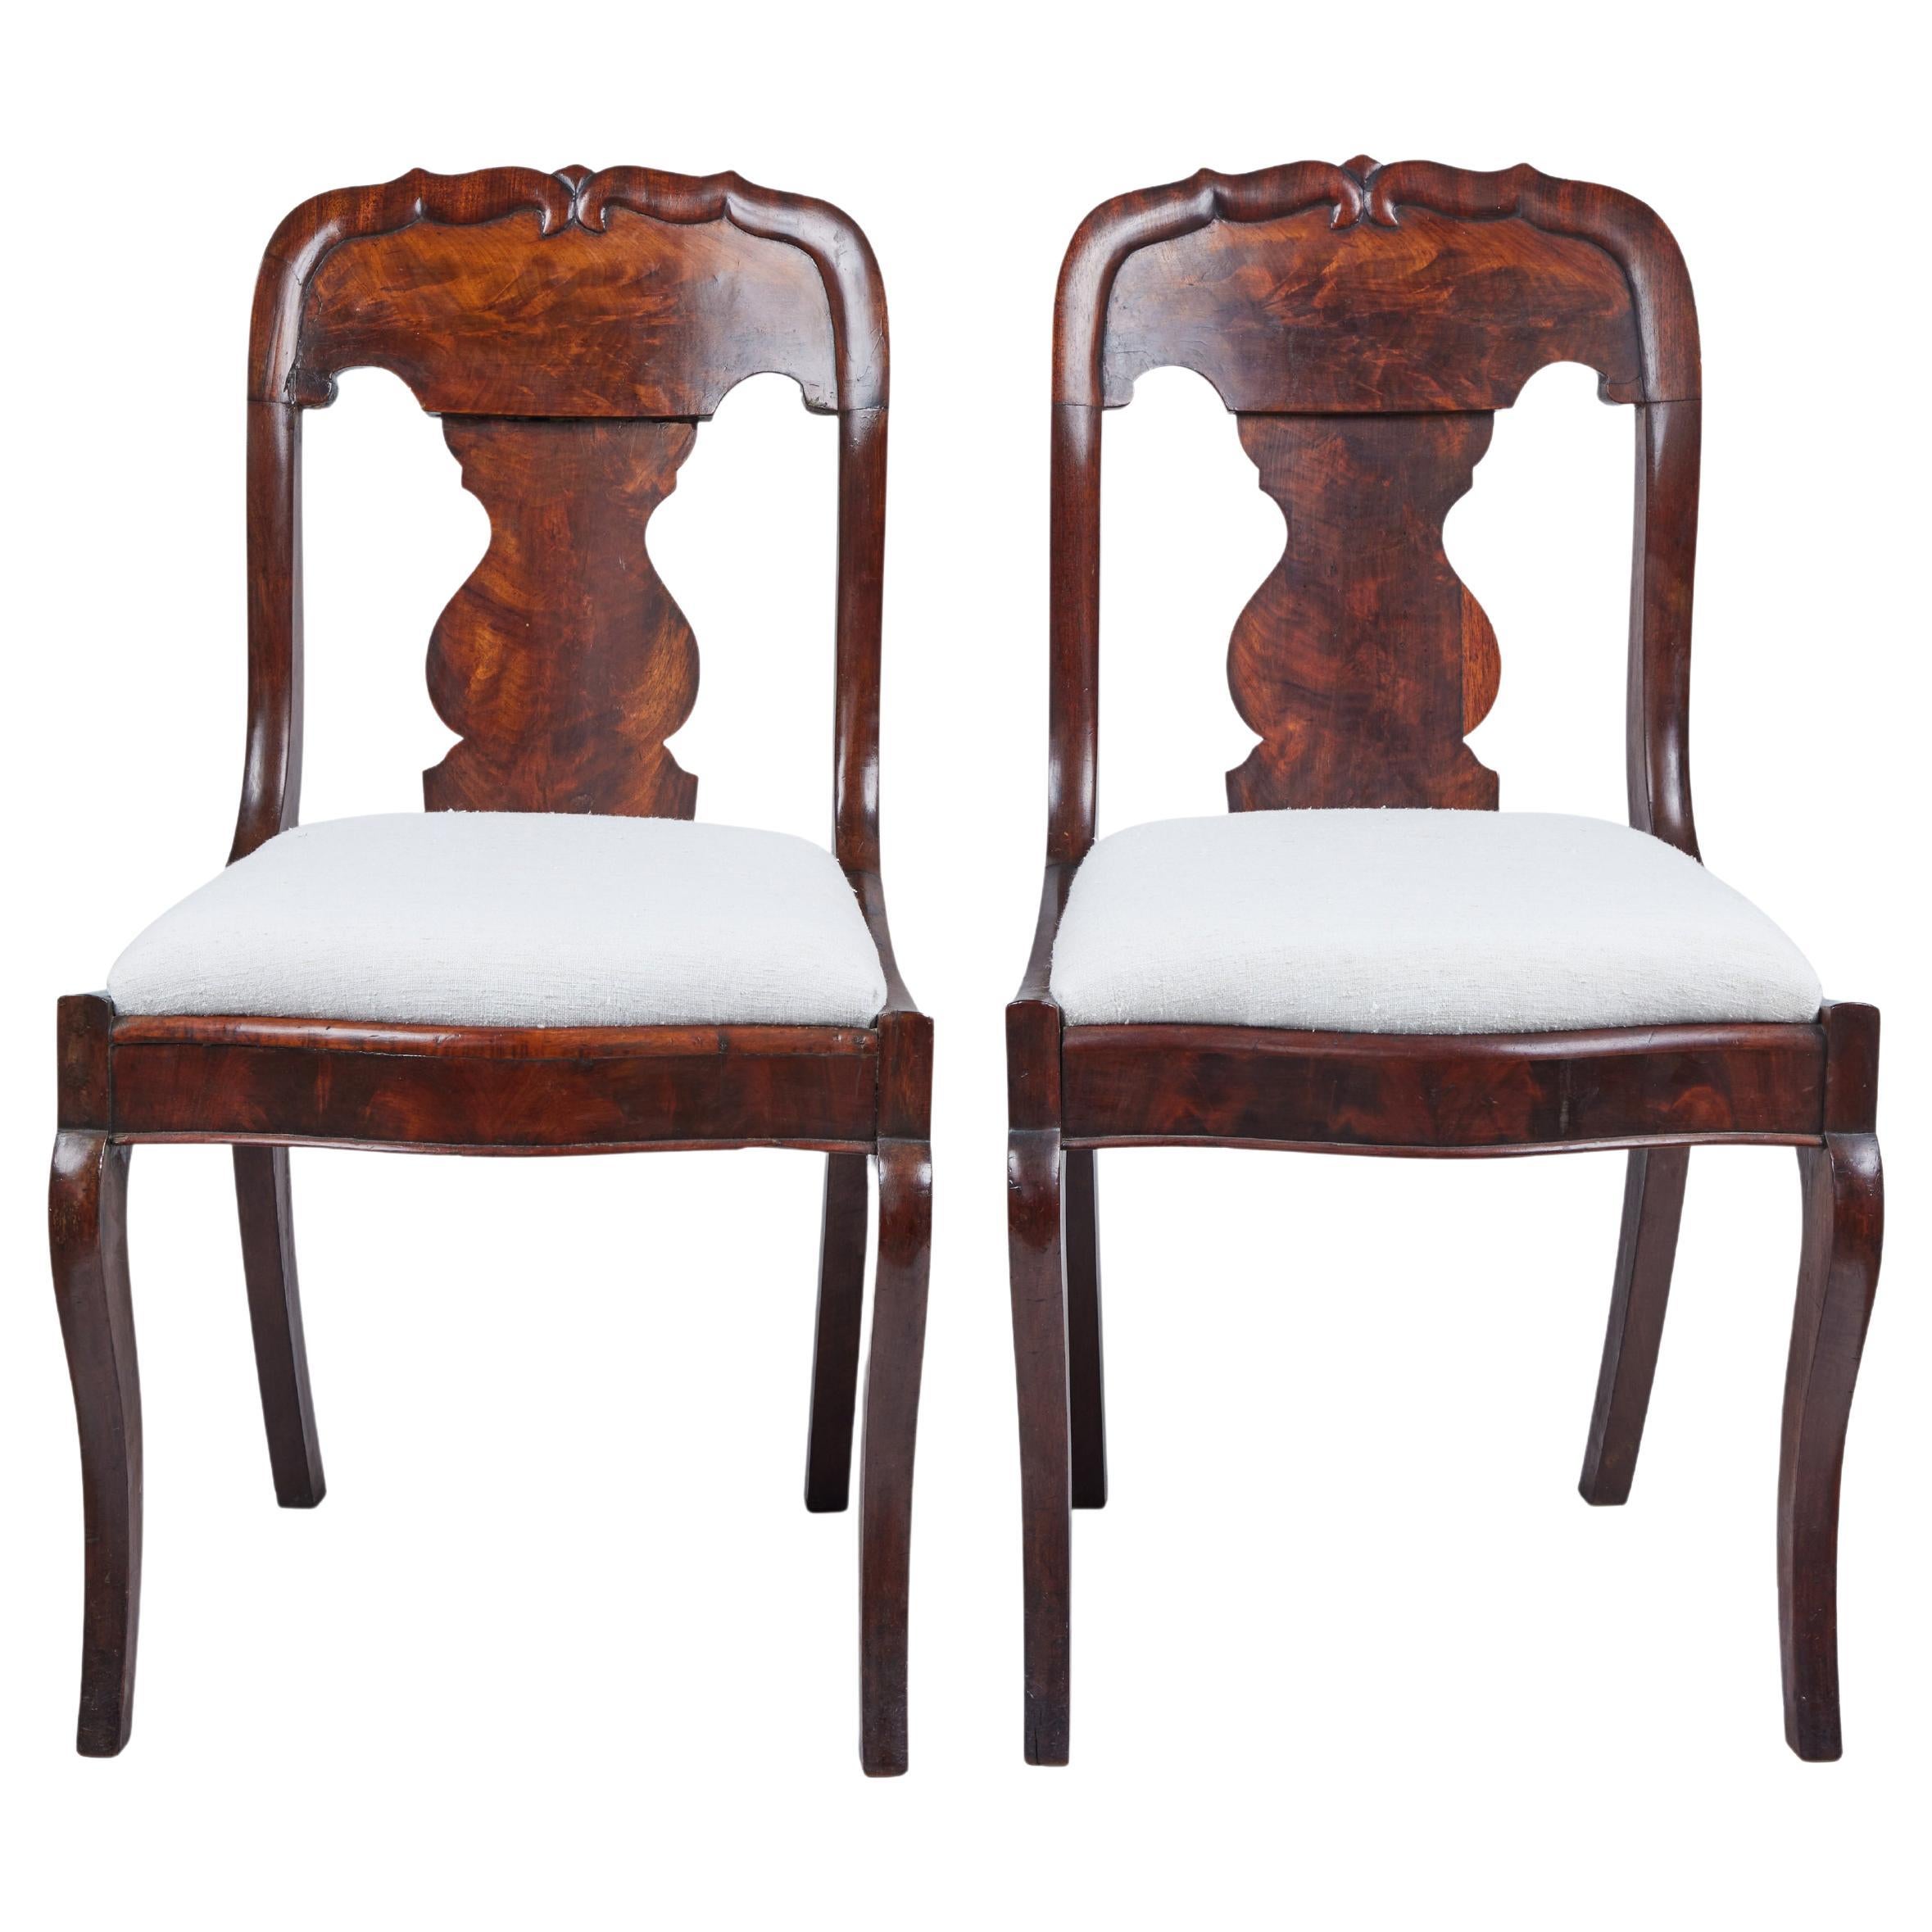 Antique Queen Anne Style Walnut Burl Wood Chairs Pair